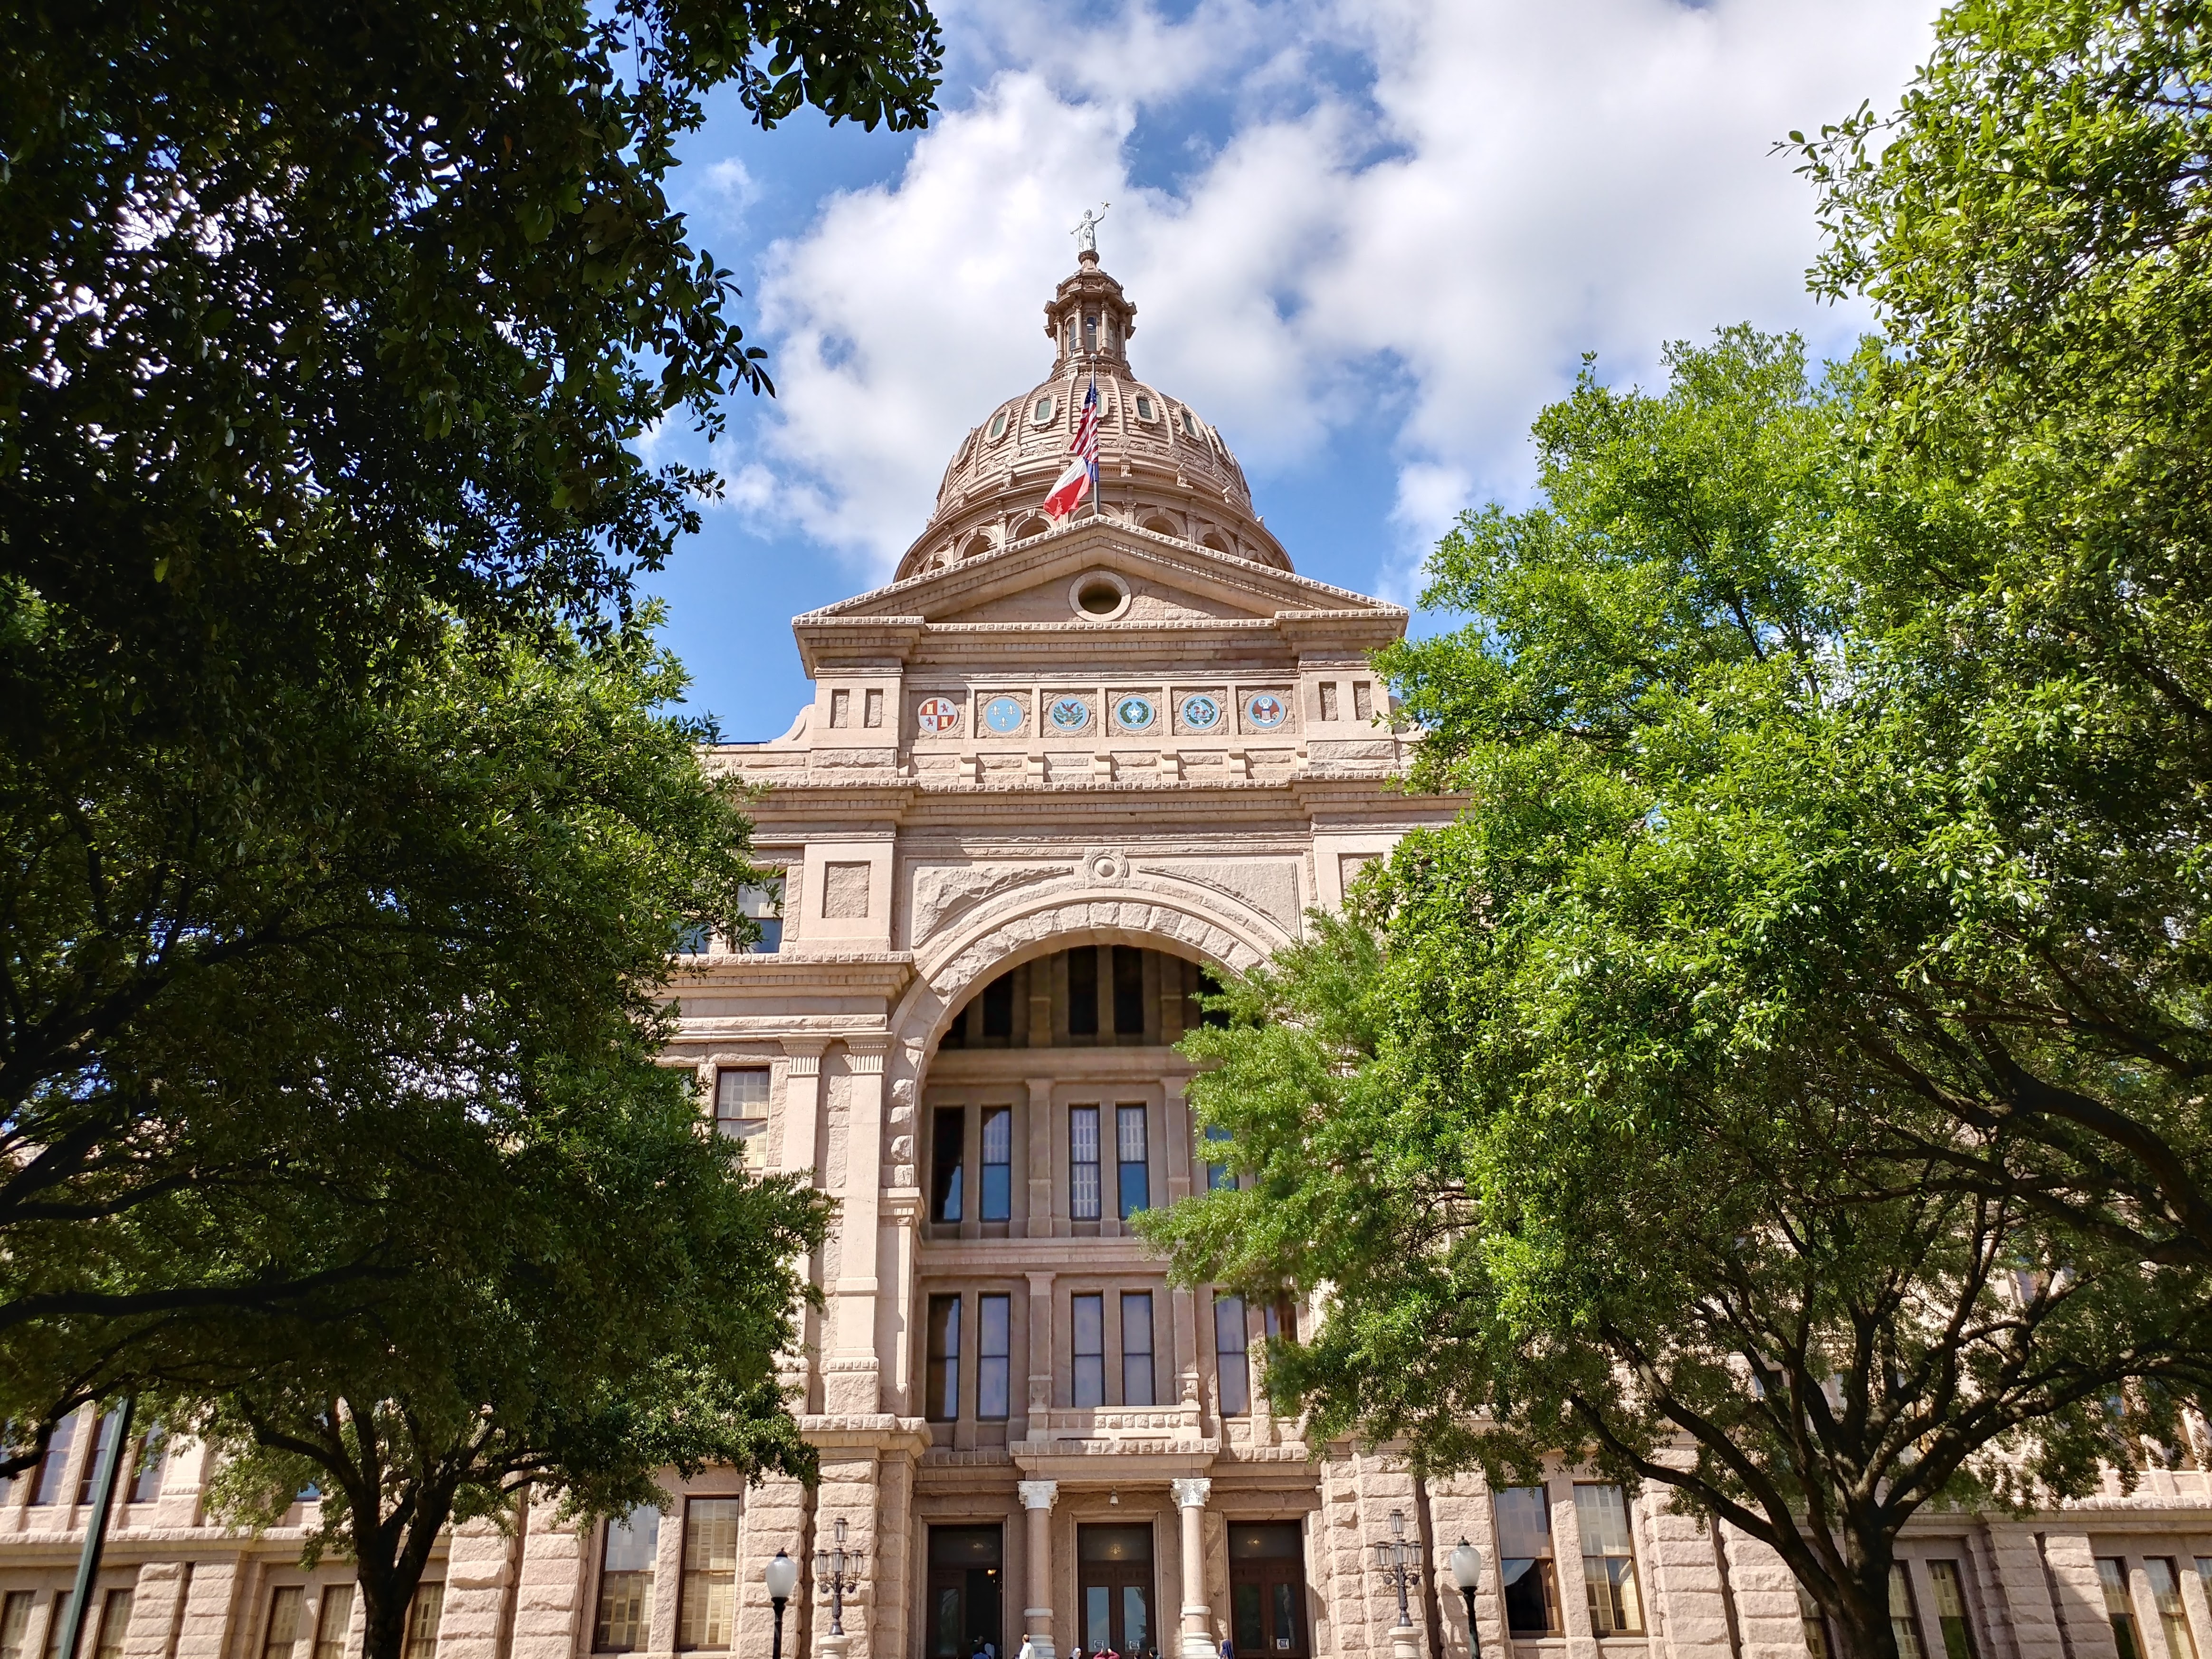 Texas State Capitol Building, Austin, TX; image by Alec Mason, via Unsplash.com.